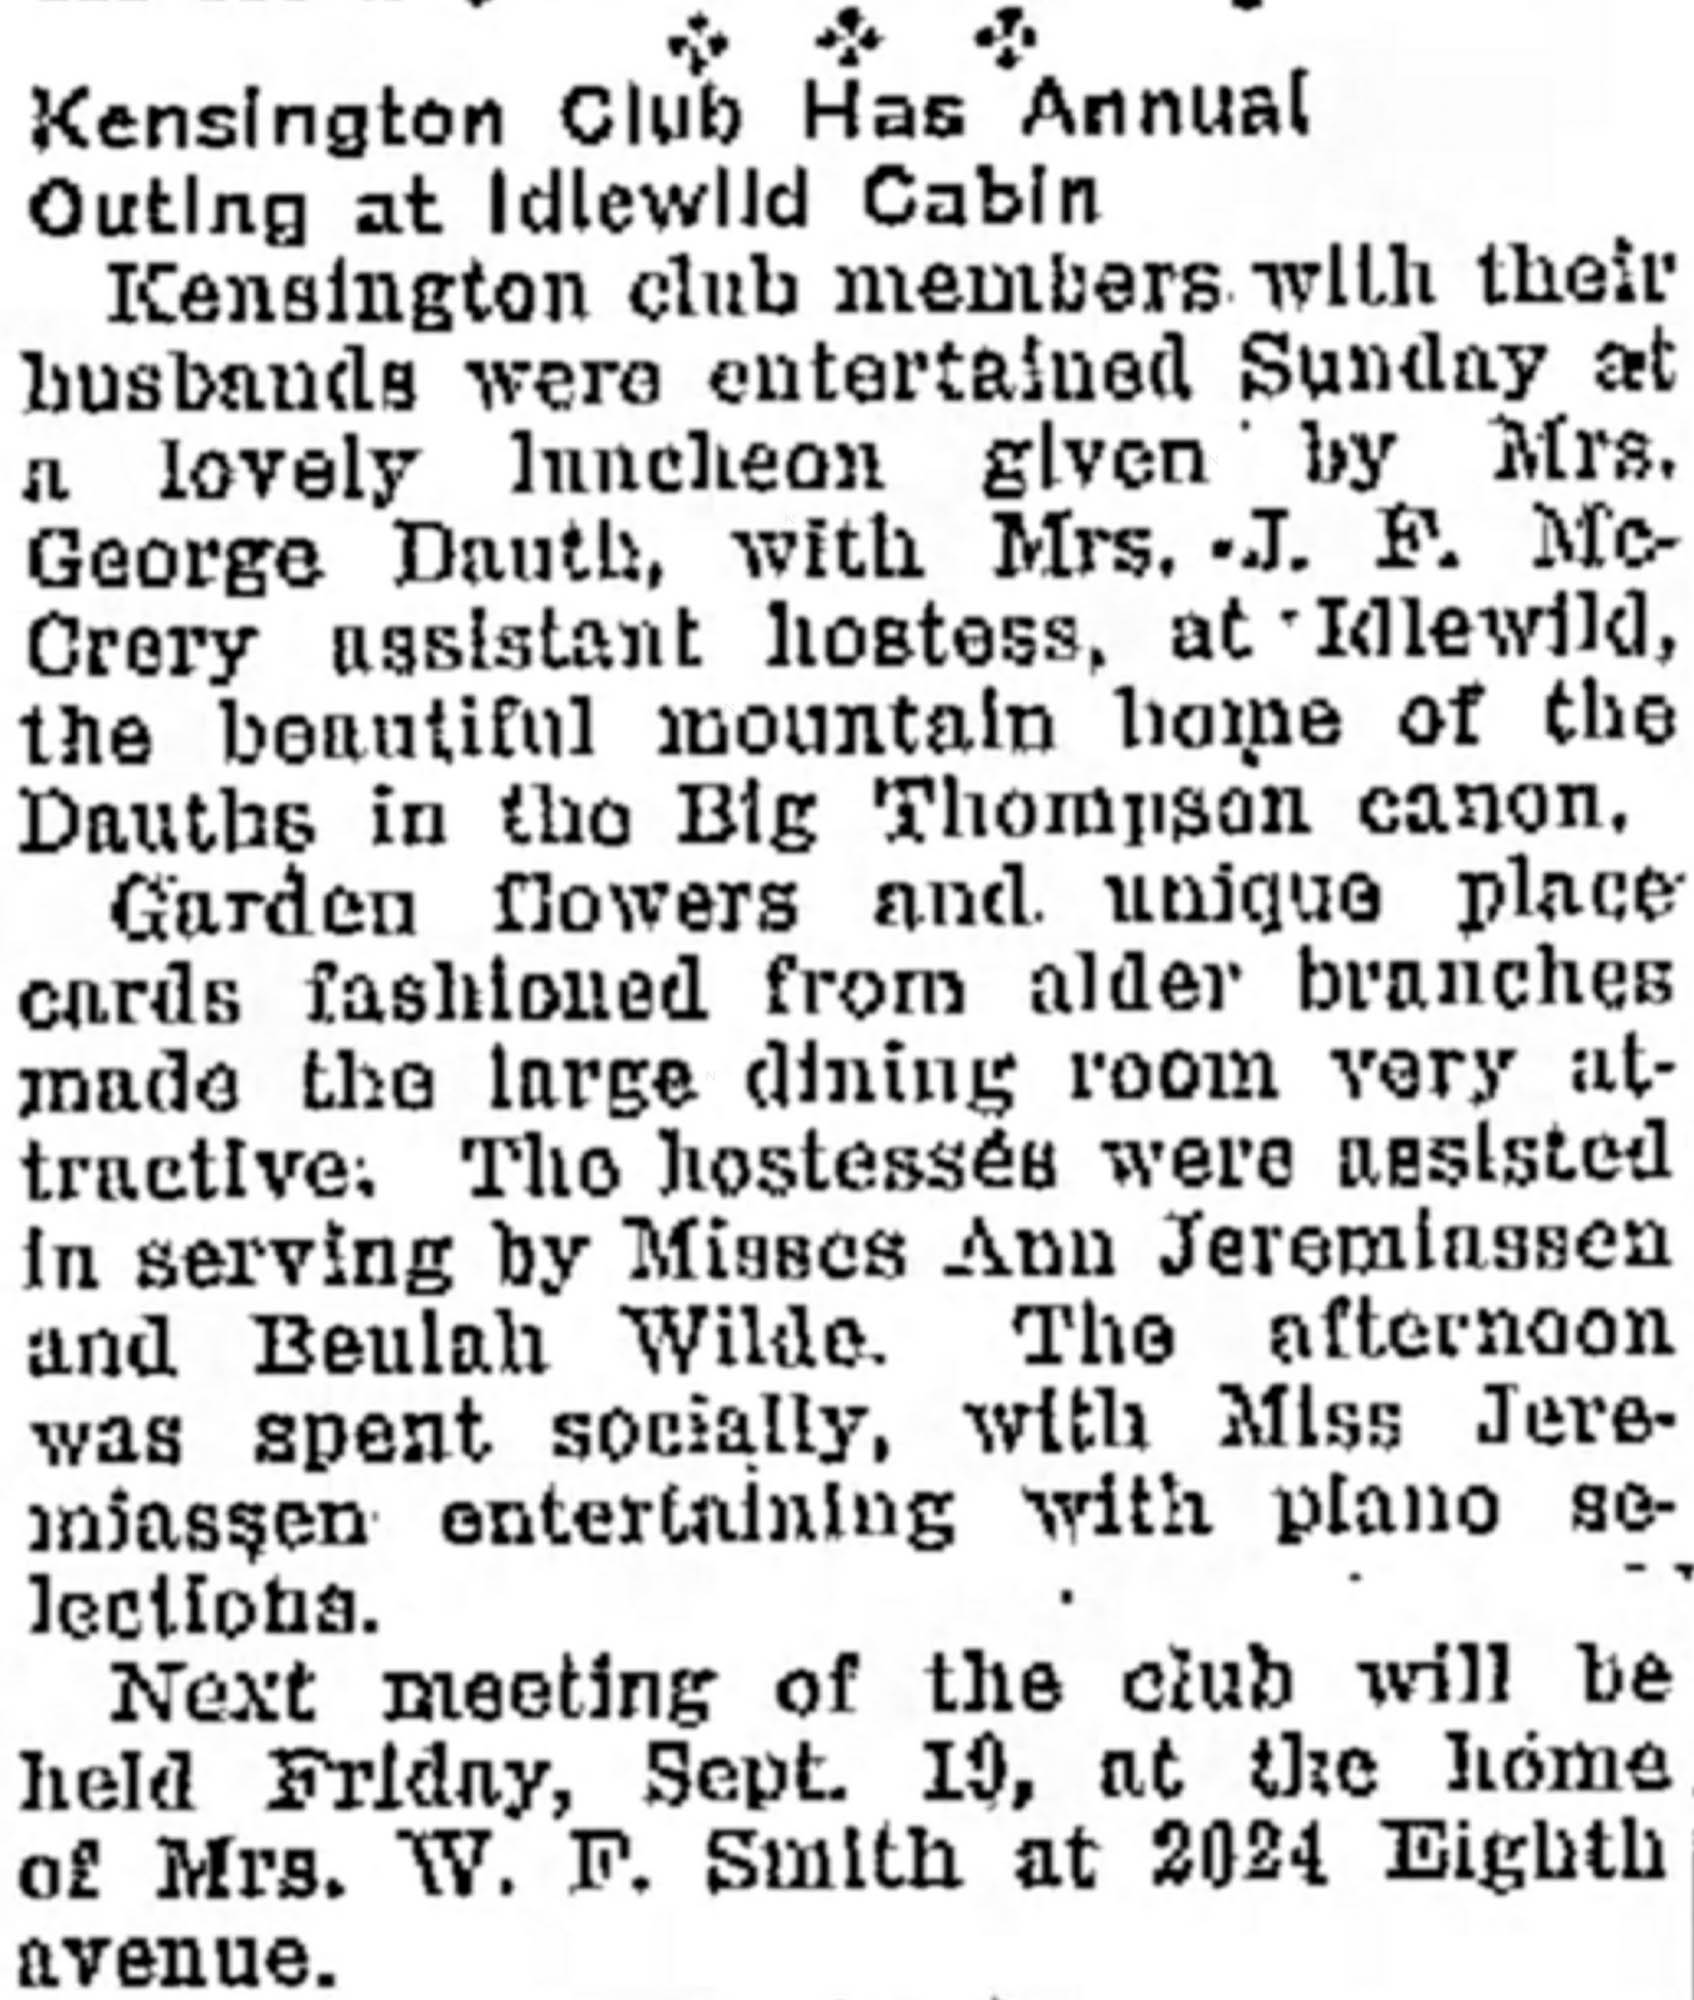 Idlewild Lodge - idlewildlodge.github.io - 1930-09-11 - Greeley Daily Tribune - Florence Dauth Hosts Kensington Club At Idlewild